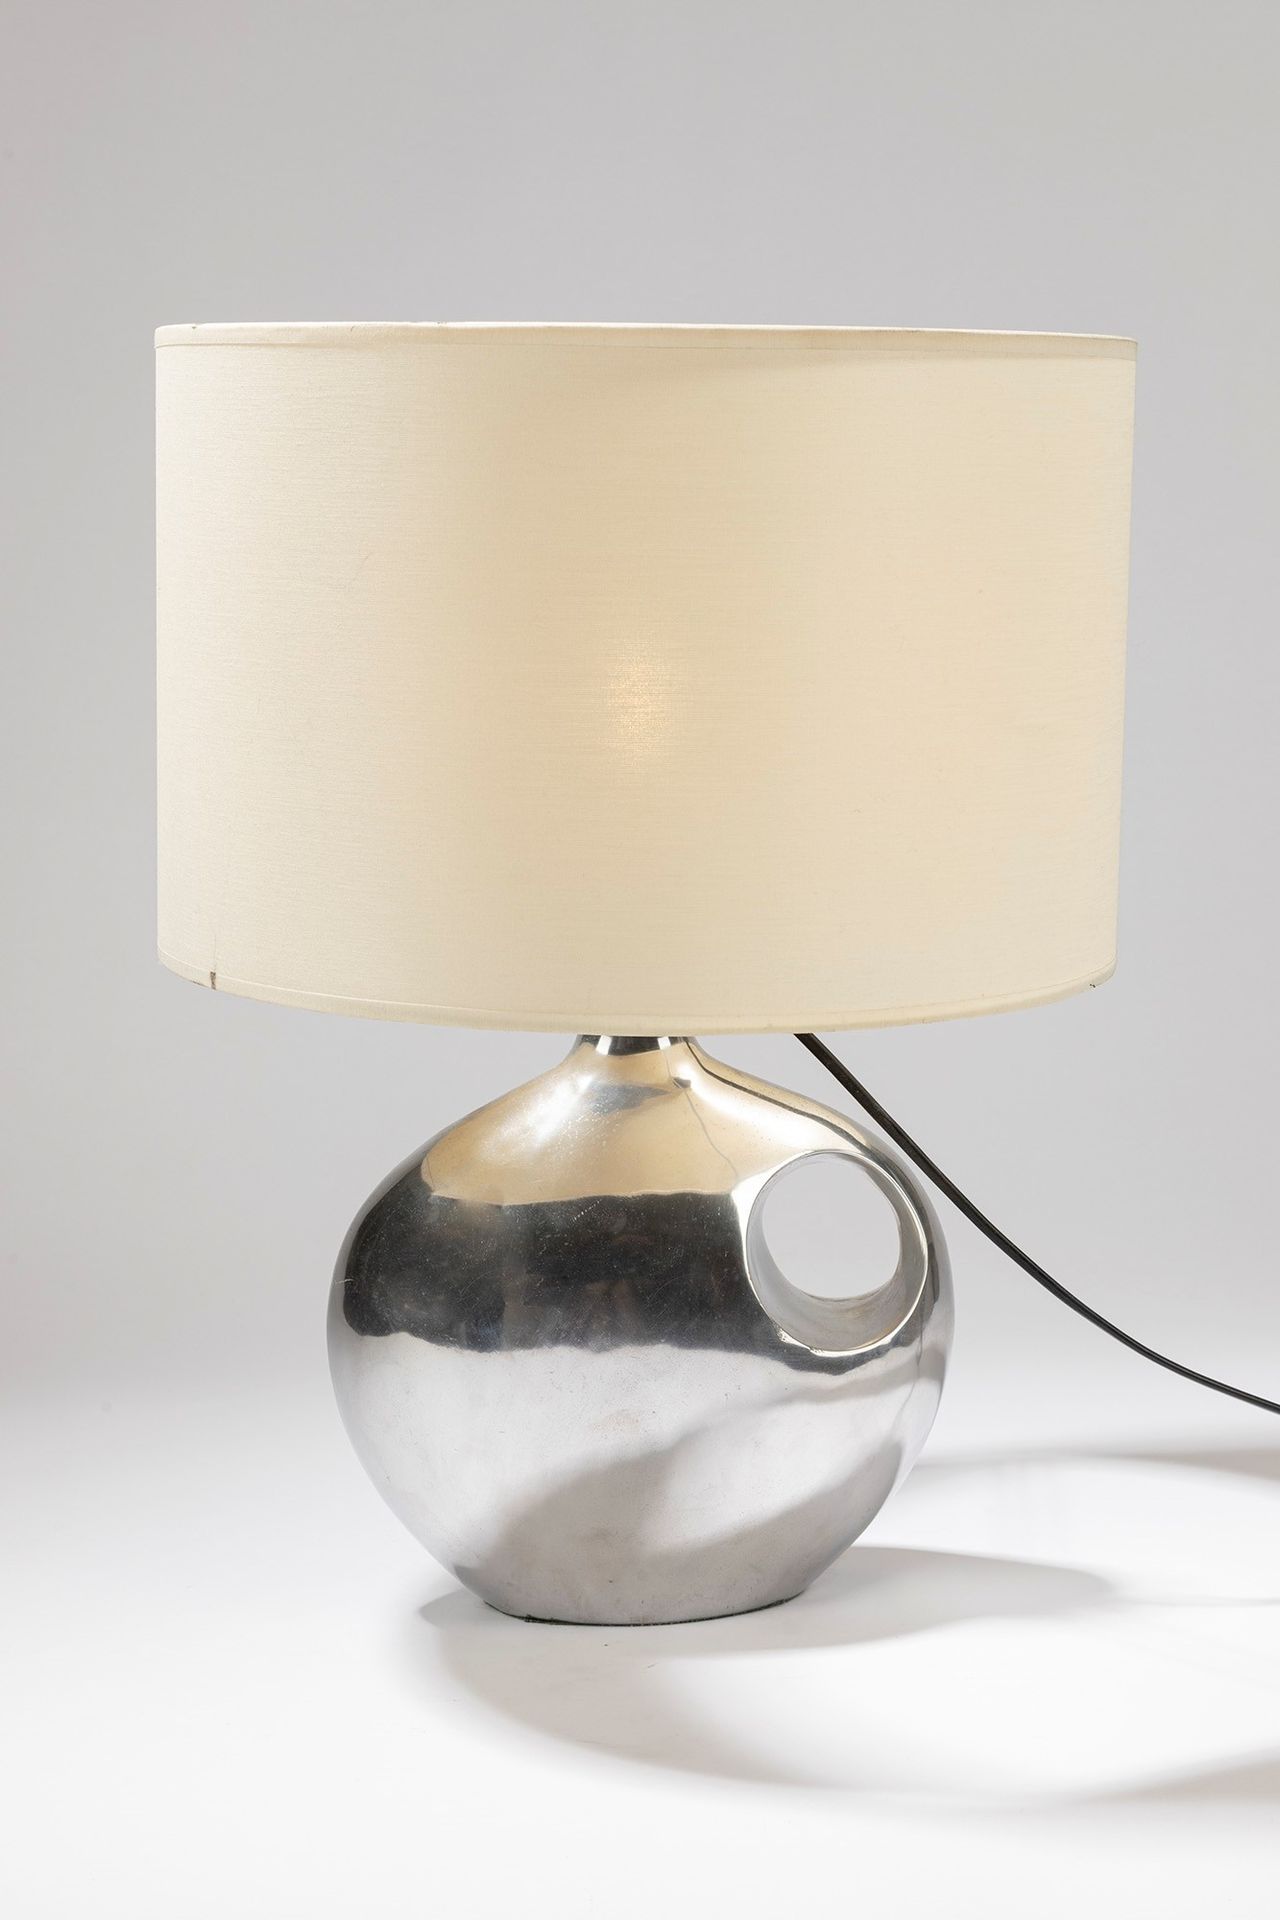 ITALIAN MANUFACTURE Table lamp, 1970 ca.

Dm cm 35, H cm 49
chromed metal.